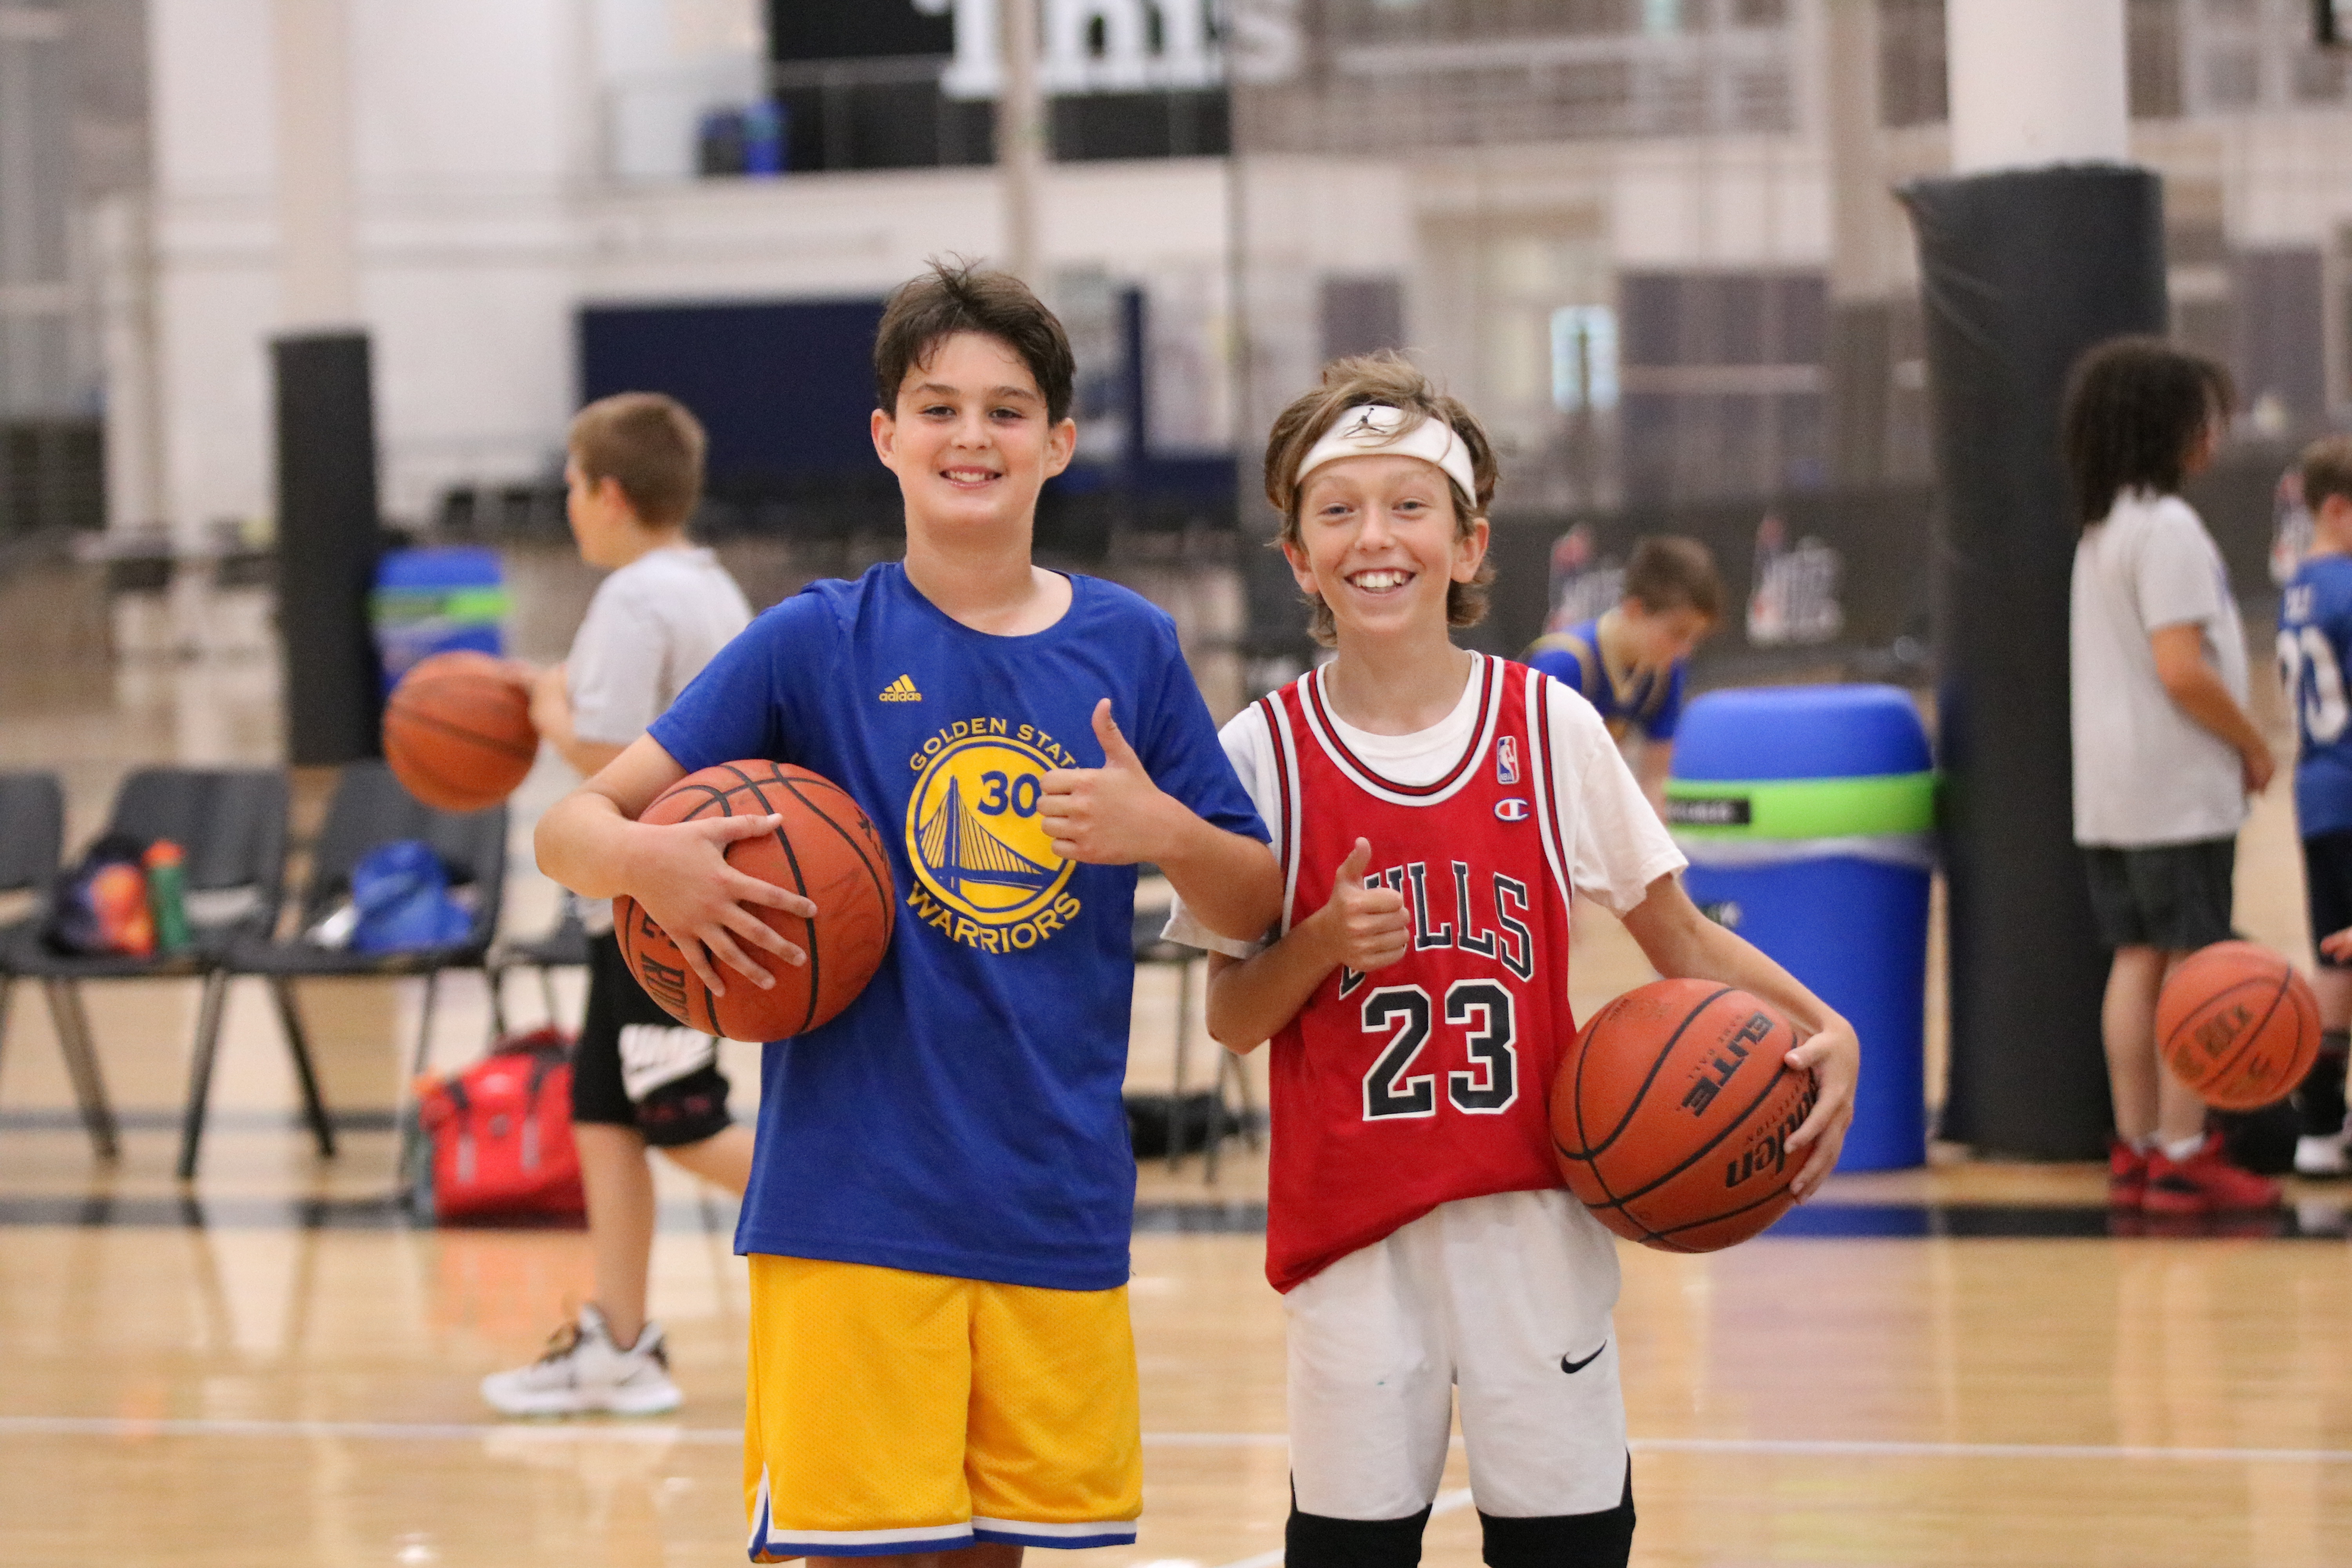 boys playing basketball in hamilton ohio